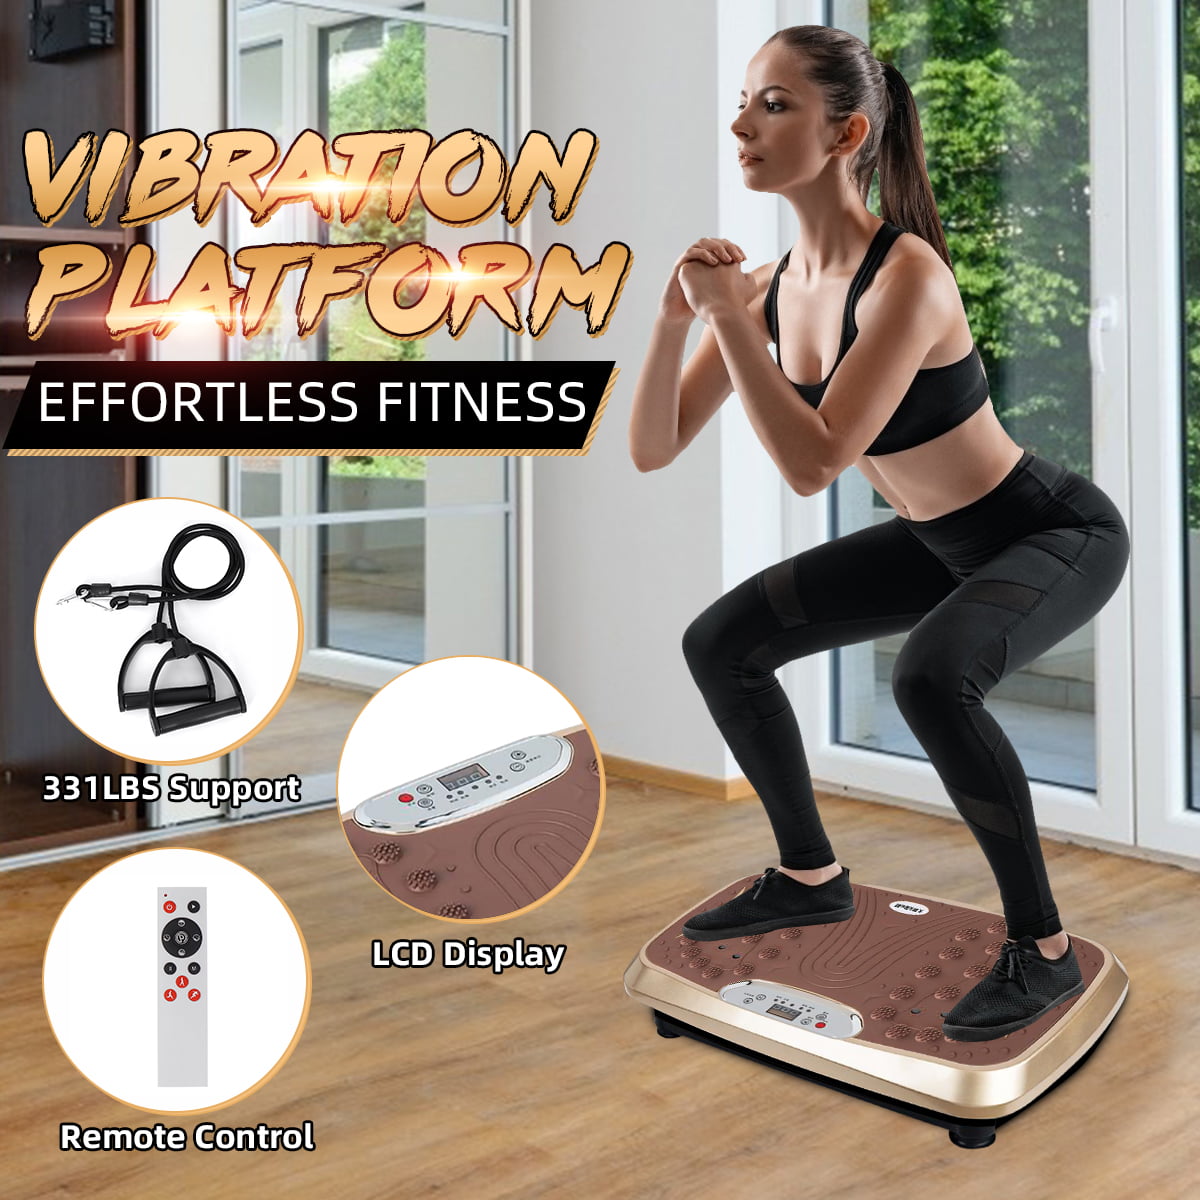 Vibration Plate Exercise Machine Powerfit Whole Body Workout Fitness Platform 